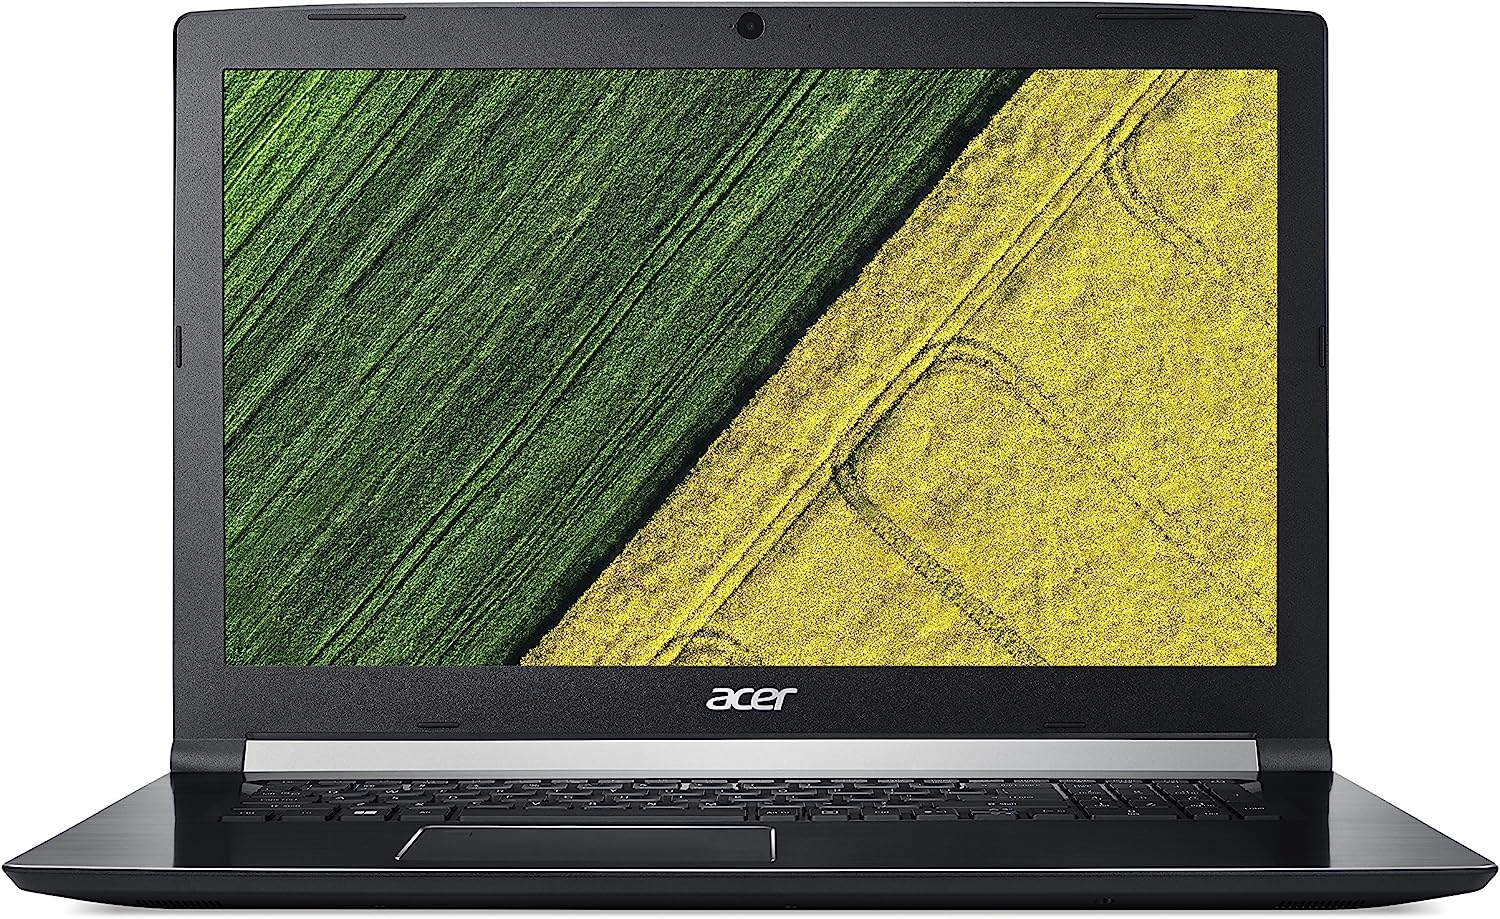 Acer Aspire 7 A717-72G-700J 17.3″ IPS FHD GTX 1060 6GB VRAM i7-8750H 16 GB Memory 256 GB SSD Windows 10 VR Ready Gaming  